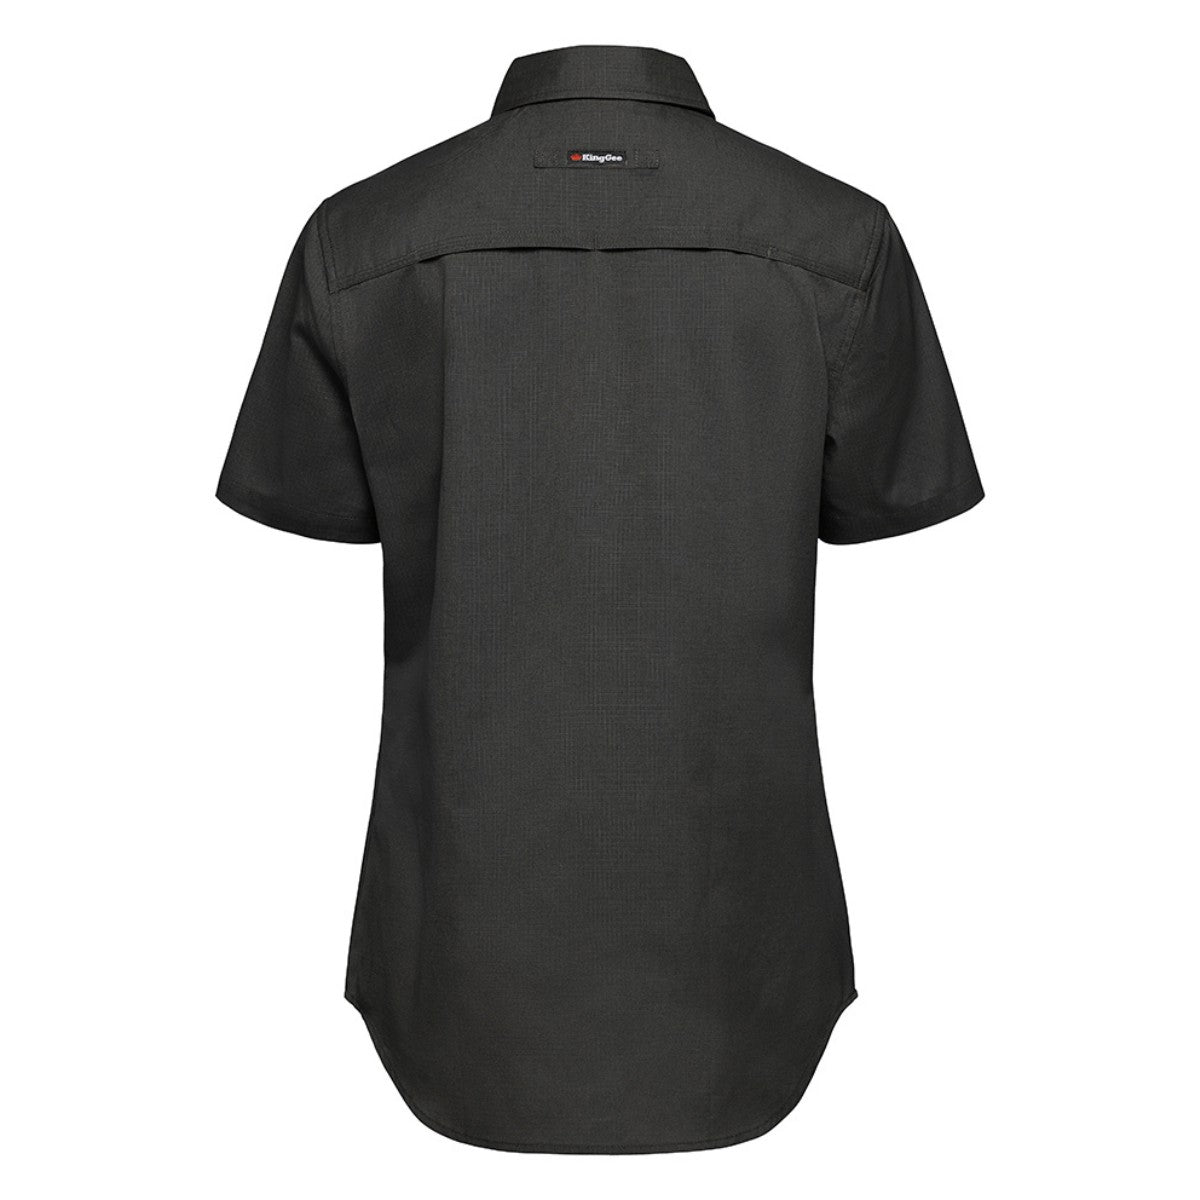 KingGee Women's Workcool 2 Shirt Short Sleeve K44205